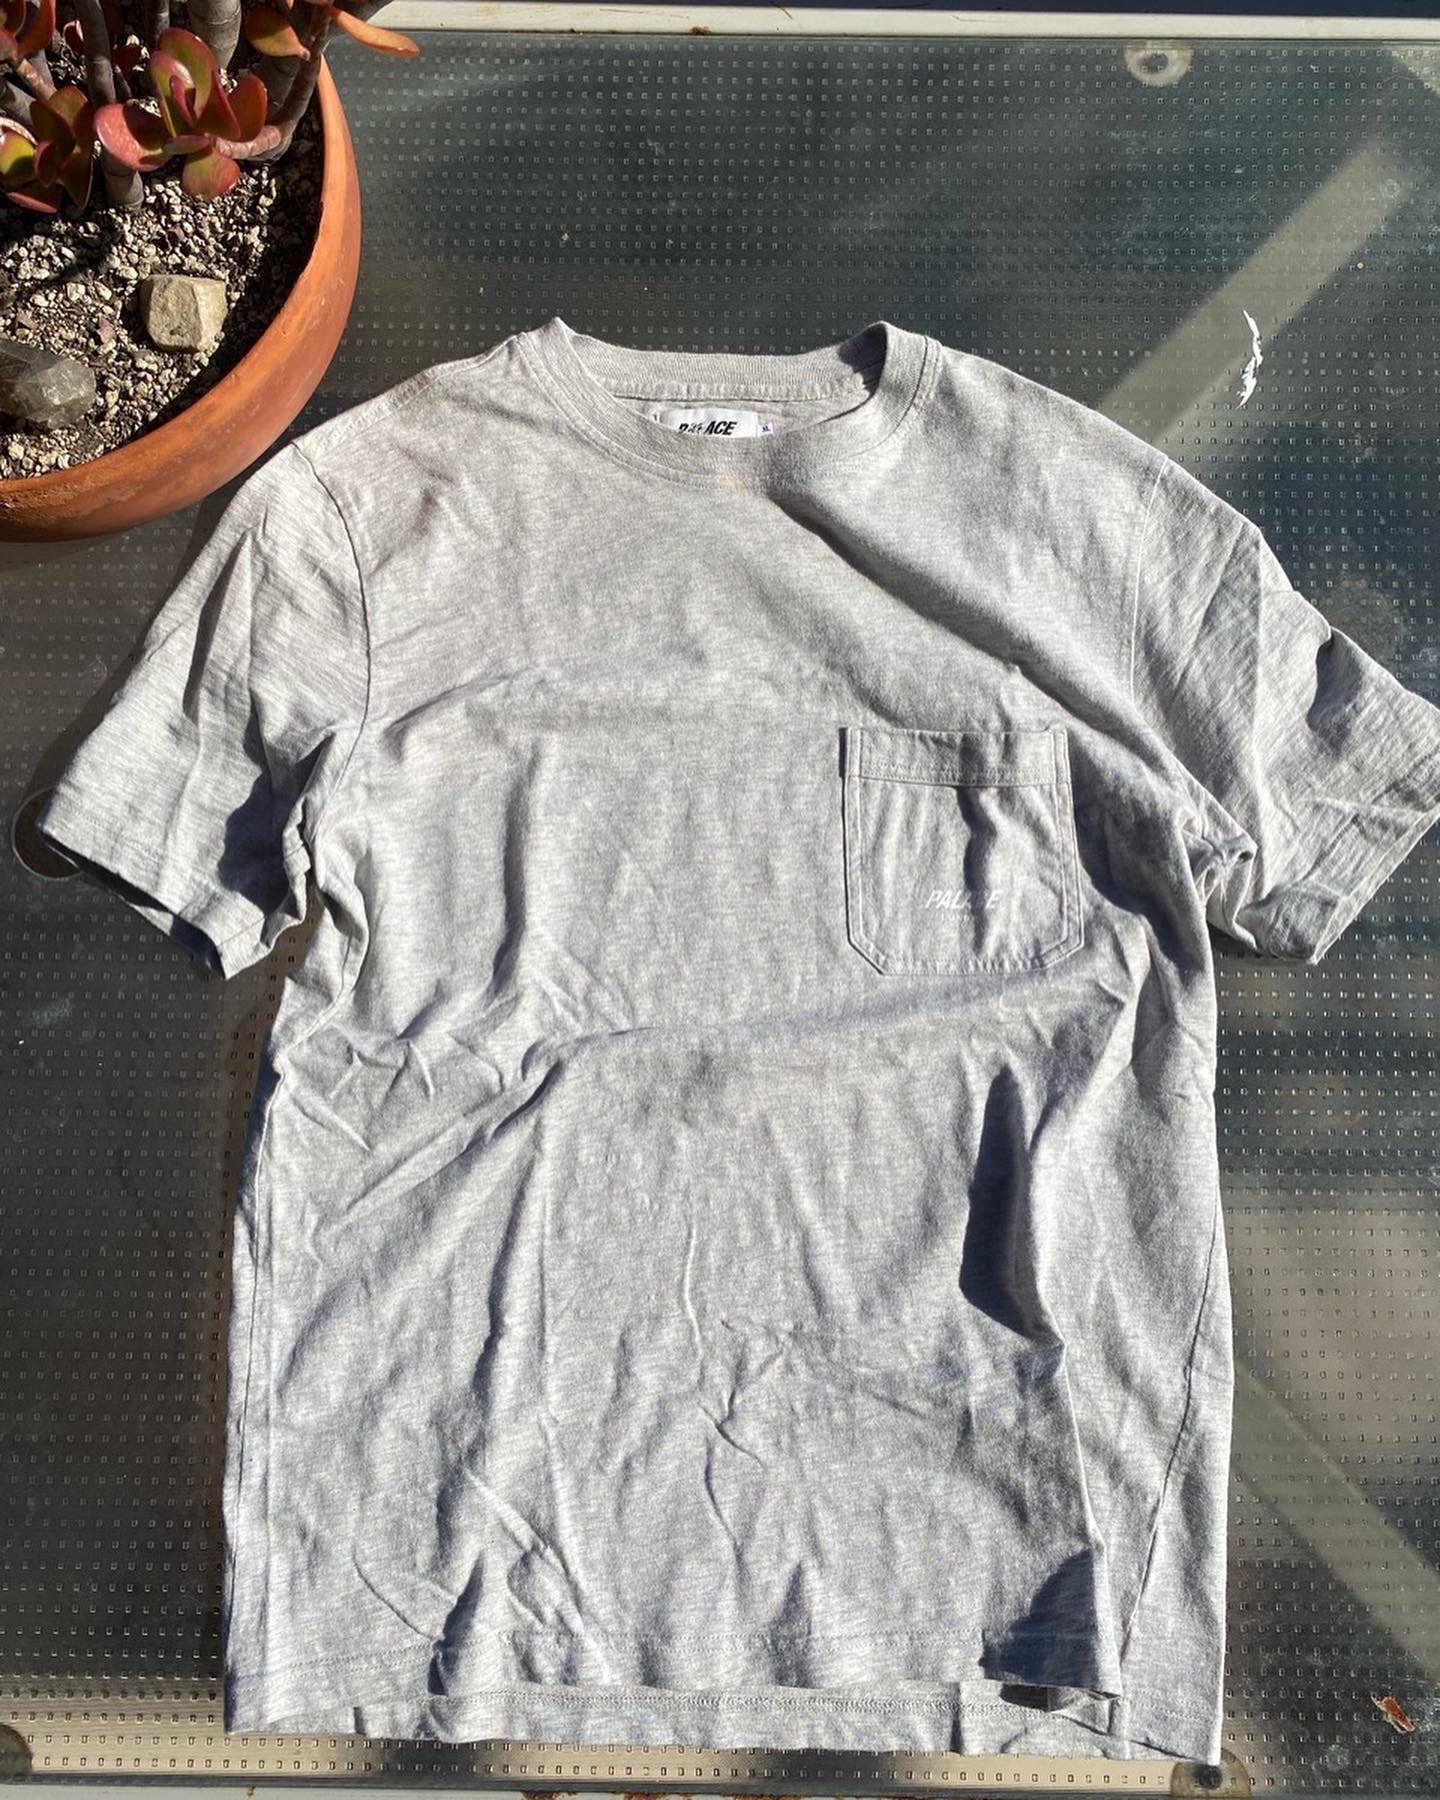 PALACE Pocket T shirts -men's XL-